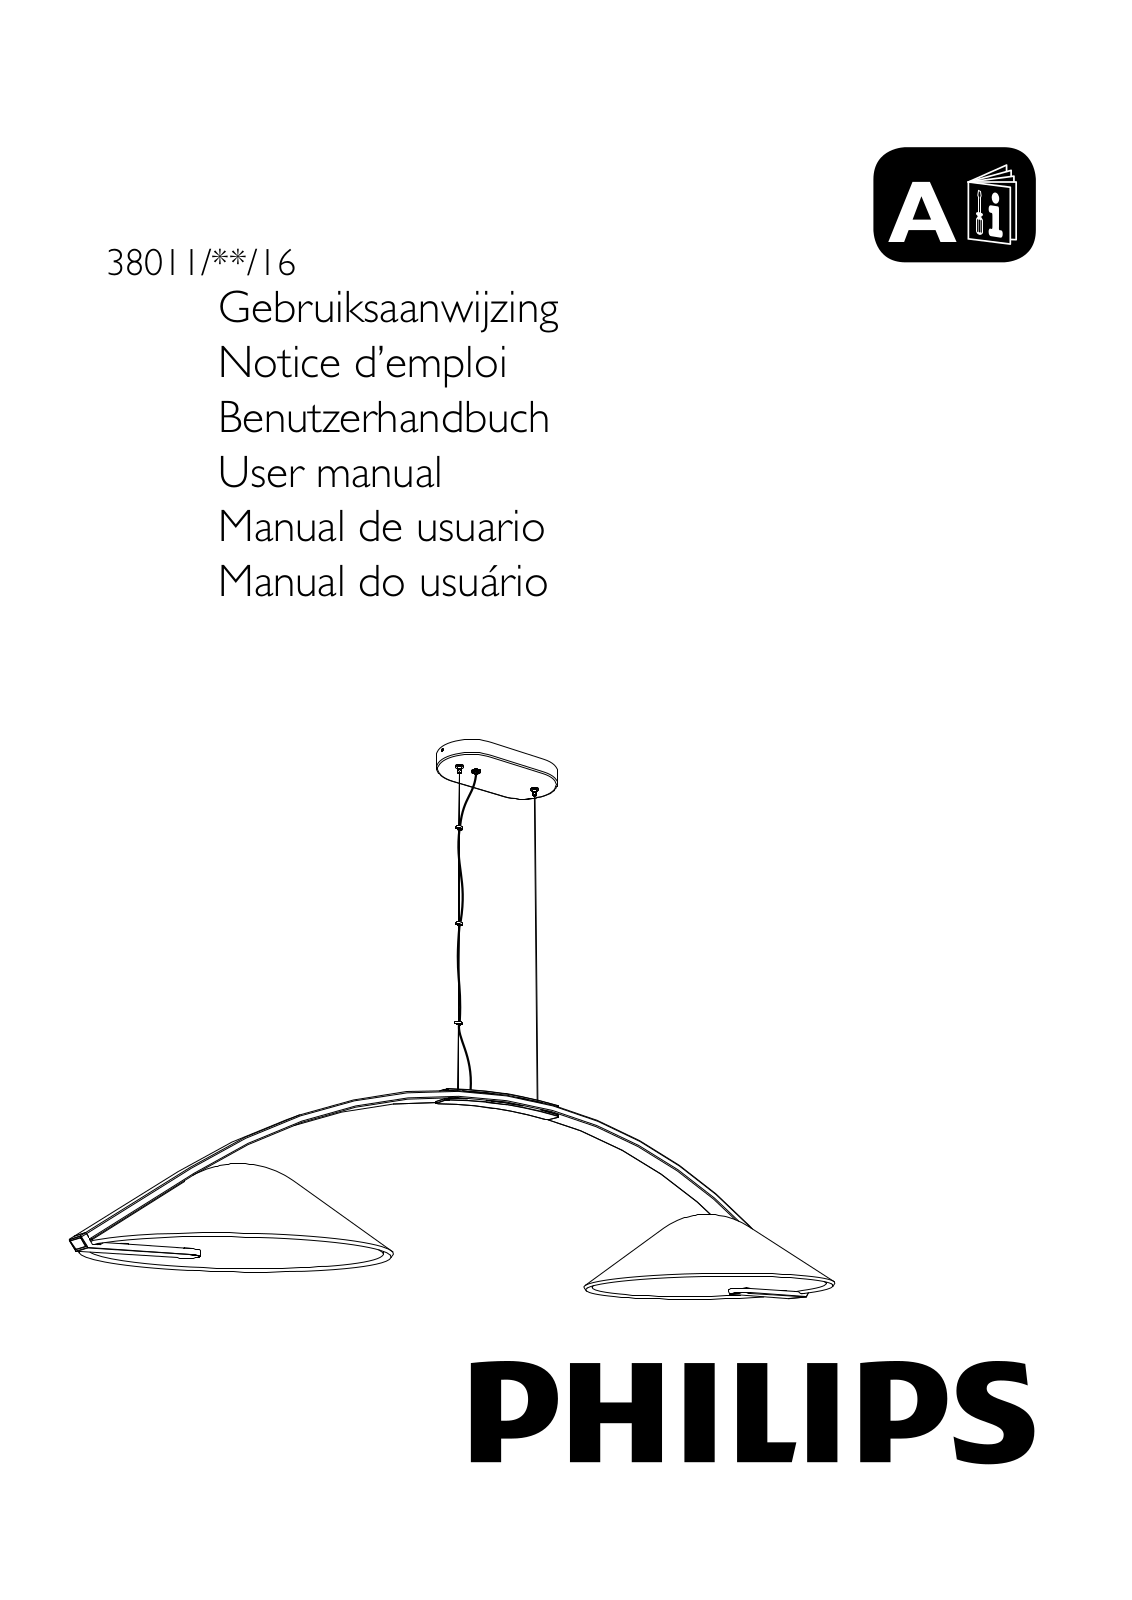 Philips 380110616, 380111716 User Manual